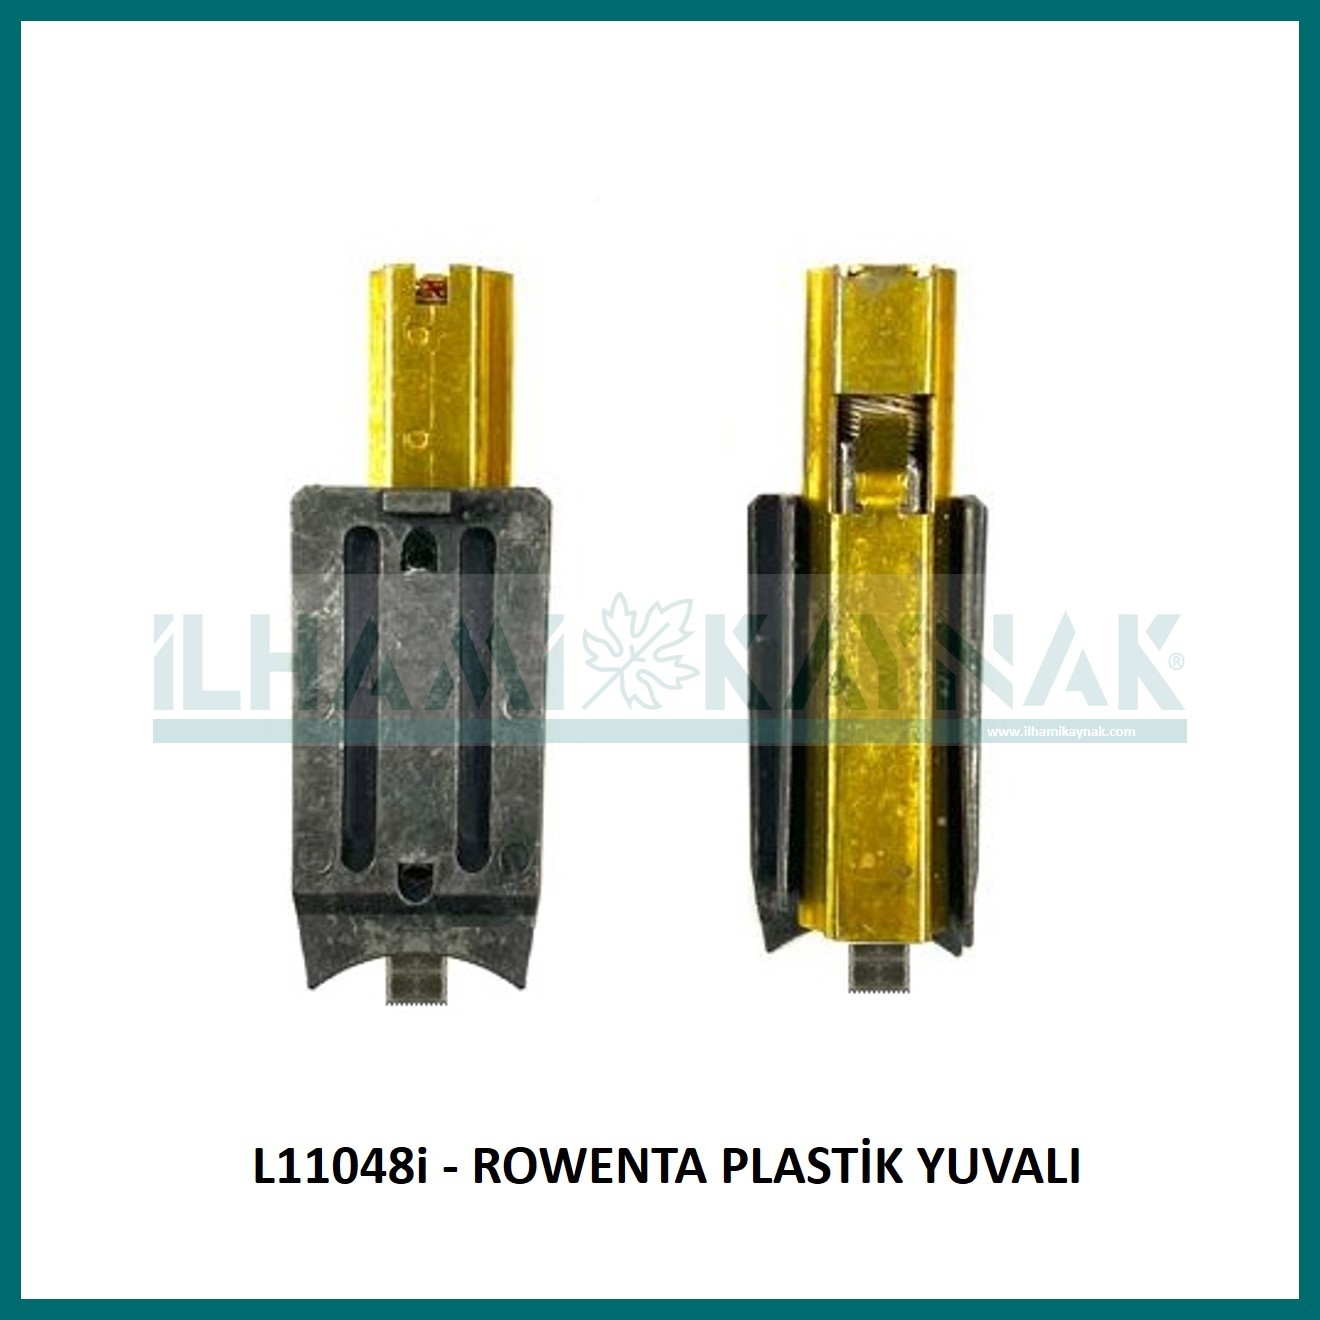 L11048i - ROWENTA PLASTİK YUVALI - 6.3*11*32 mm - Minimum Satın Alım: 10 Adet